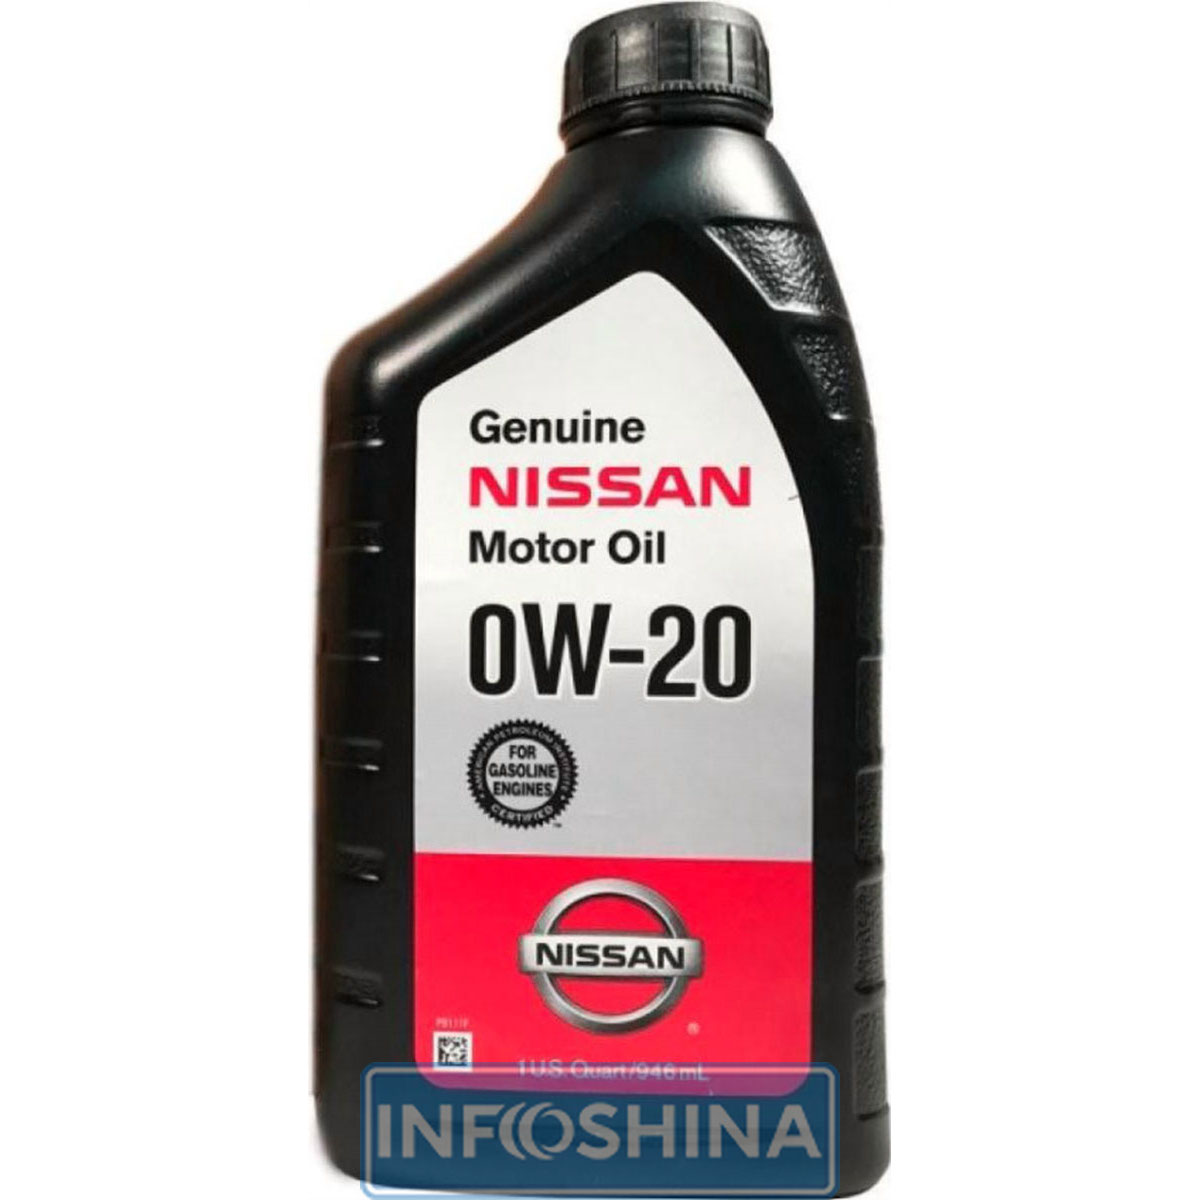 Nissan Genuine Motor Oil 0W-20